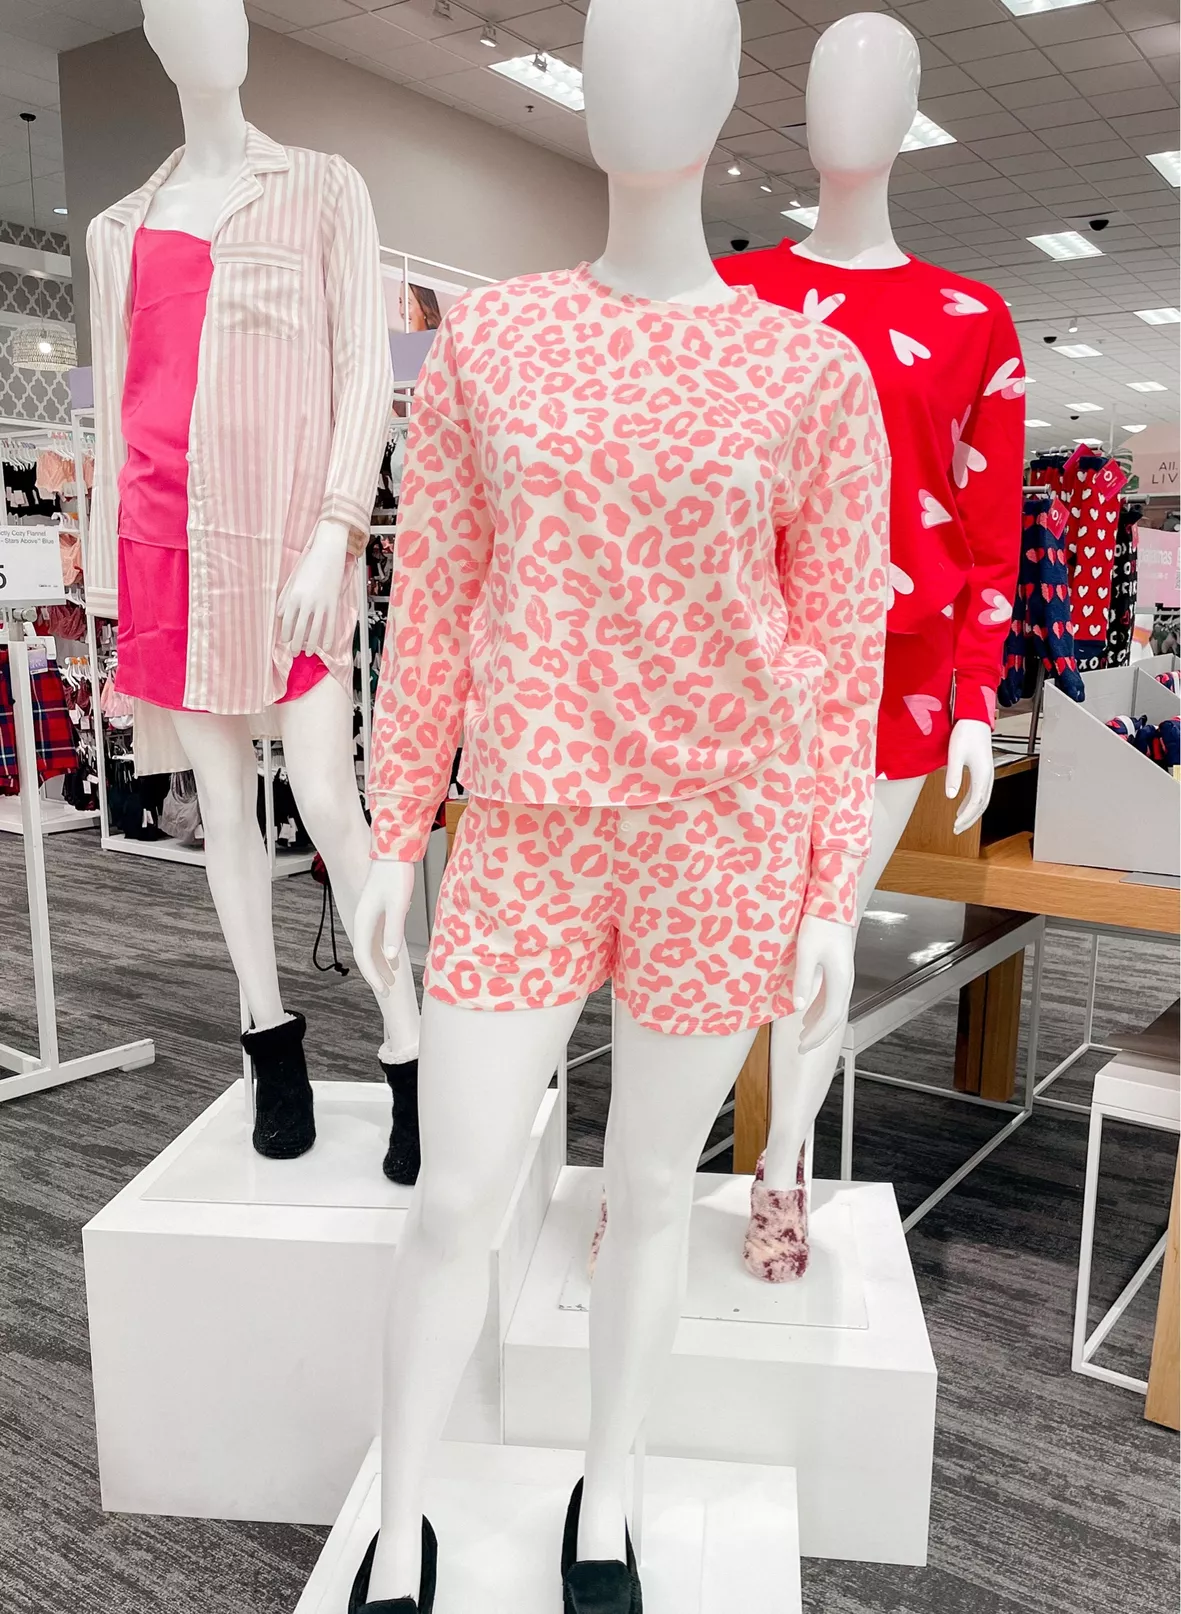 Cheibear Womens Lounge Summer Ruffle Cami Tops With Shorts Pajamas Sets  Pink Large : Target